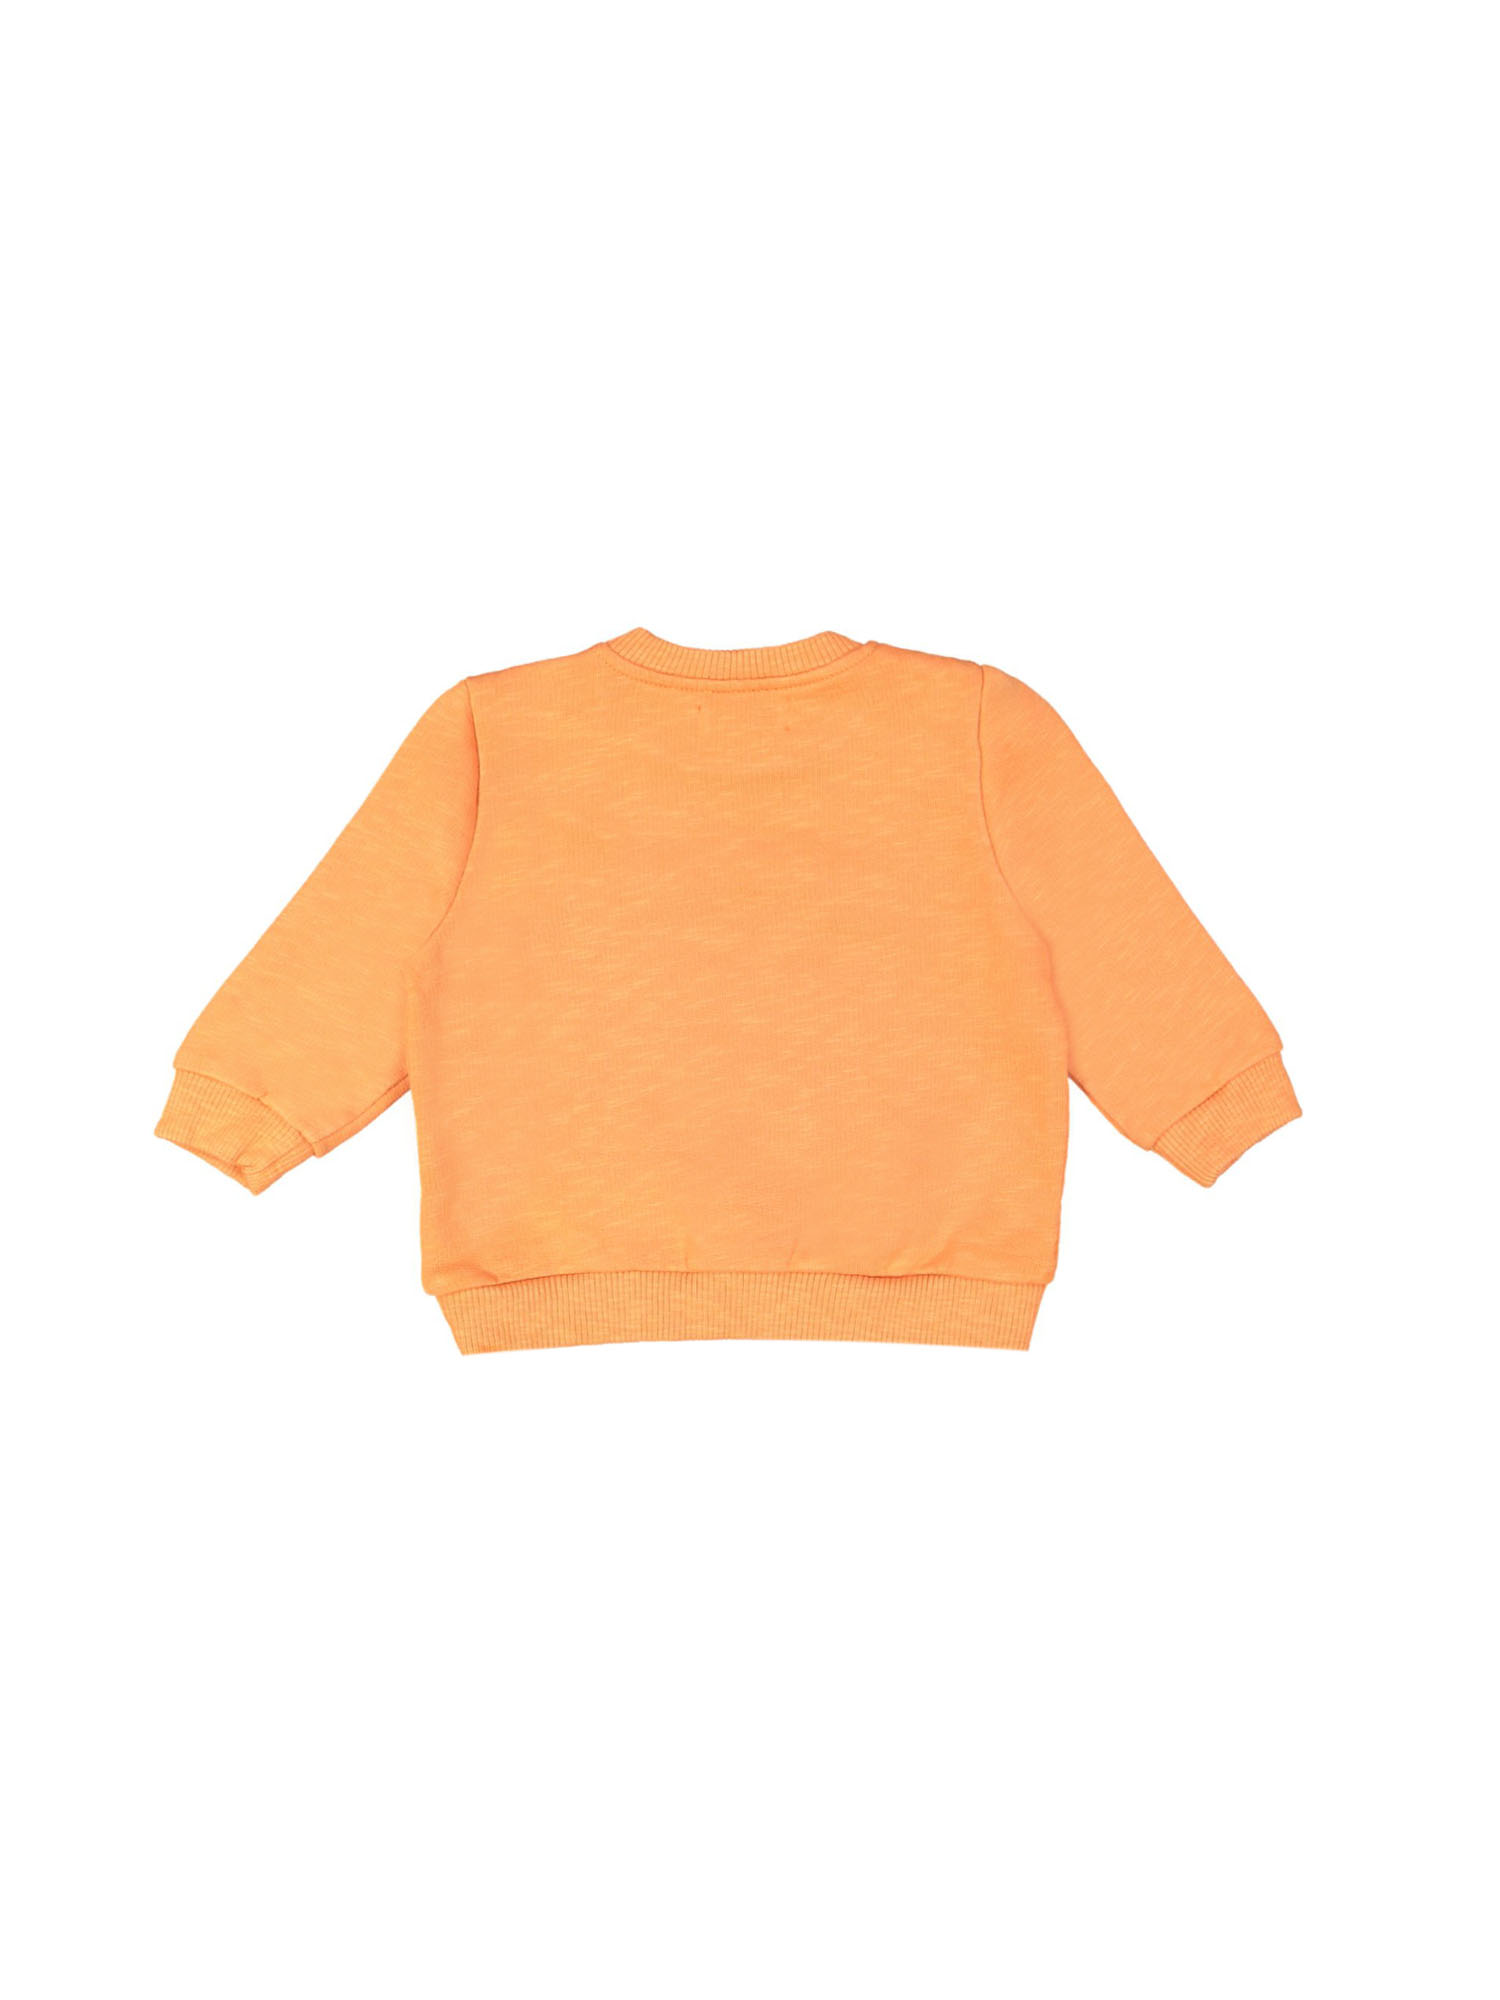 sweater mini doubleF orange 03m